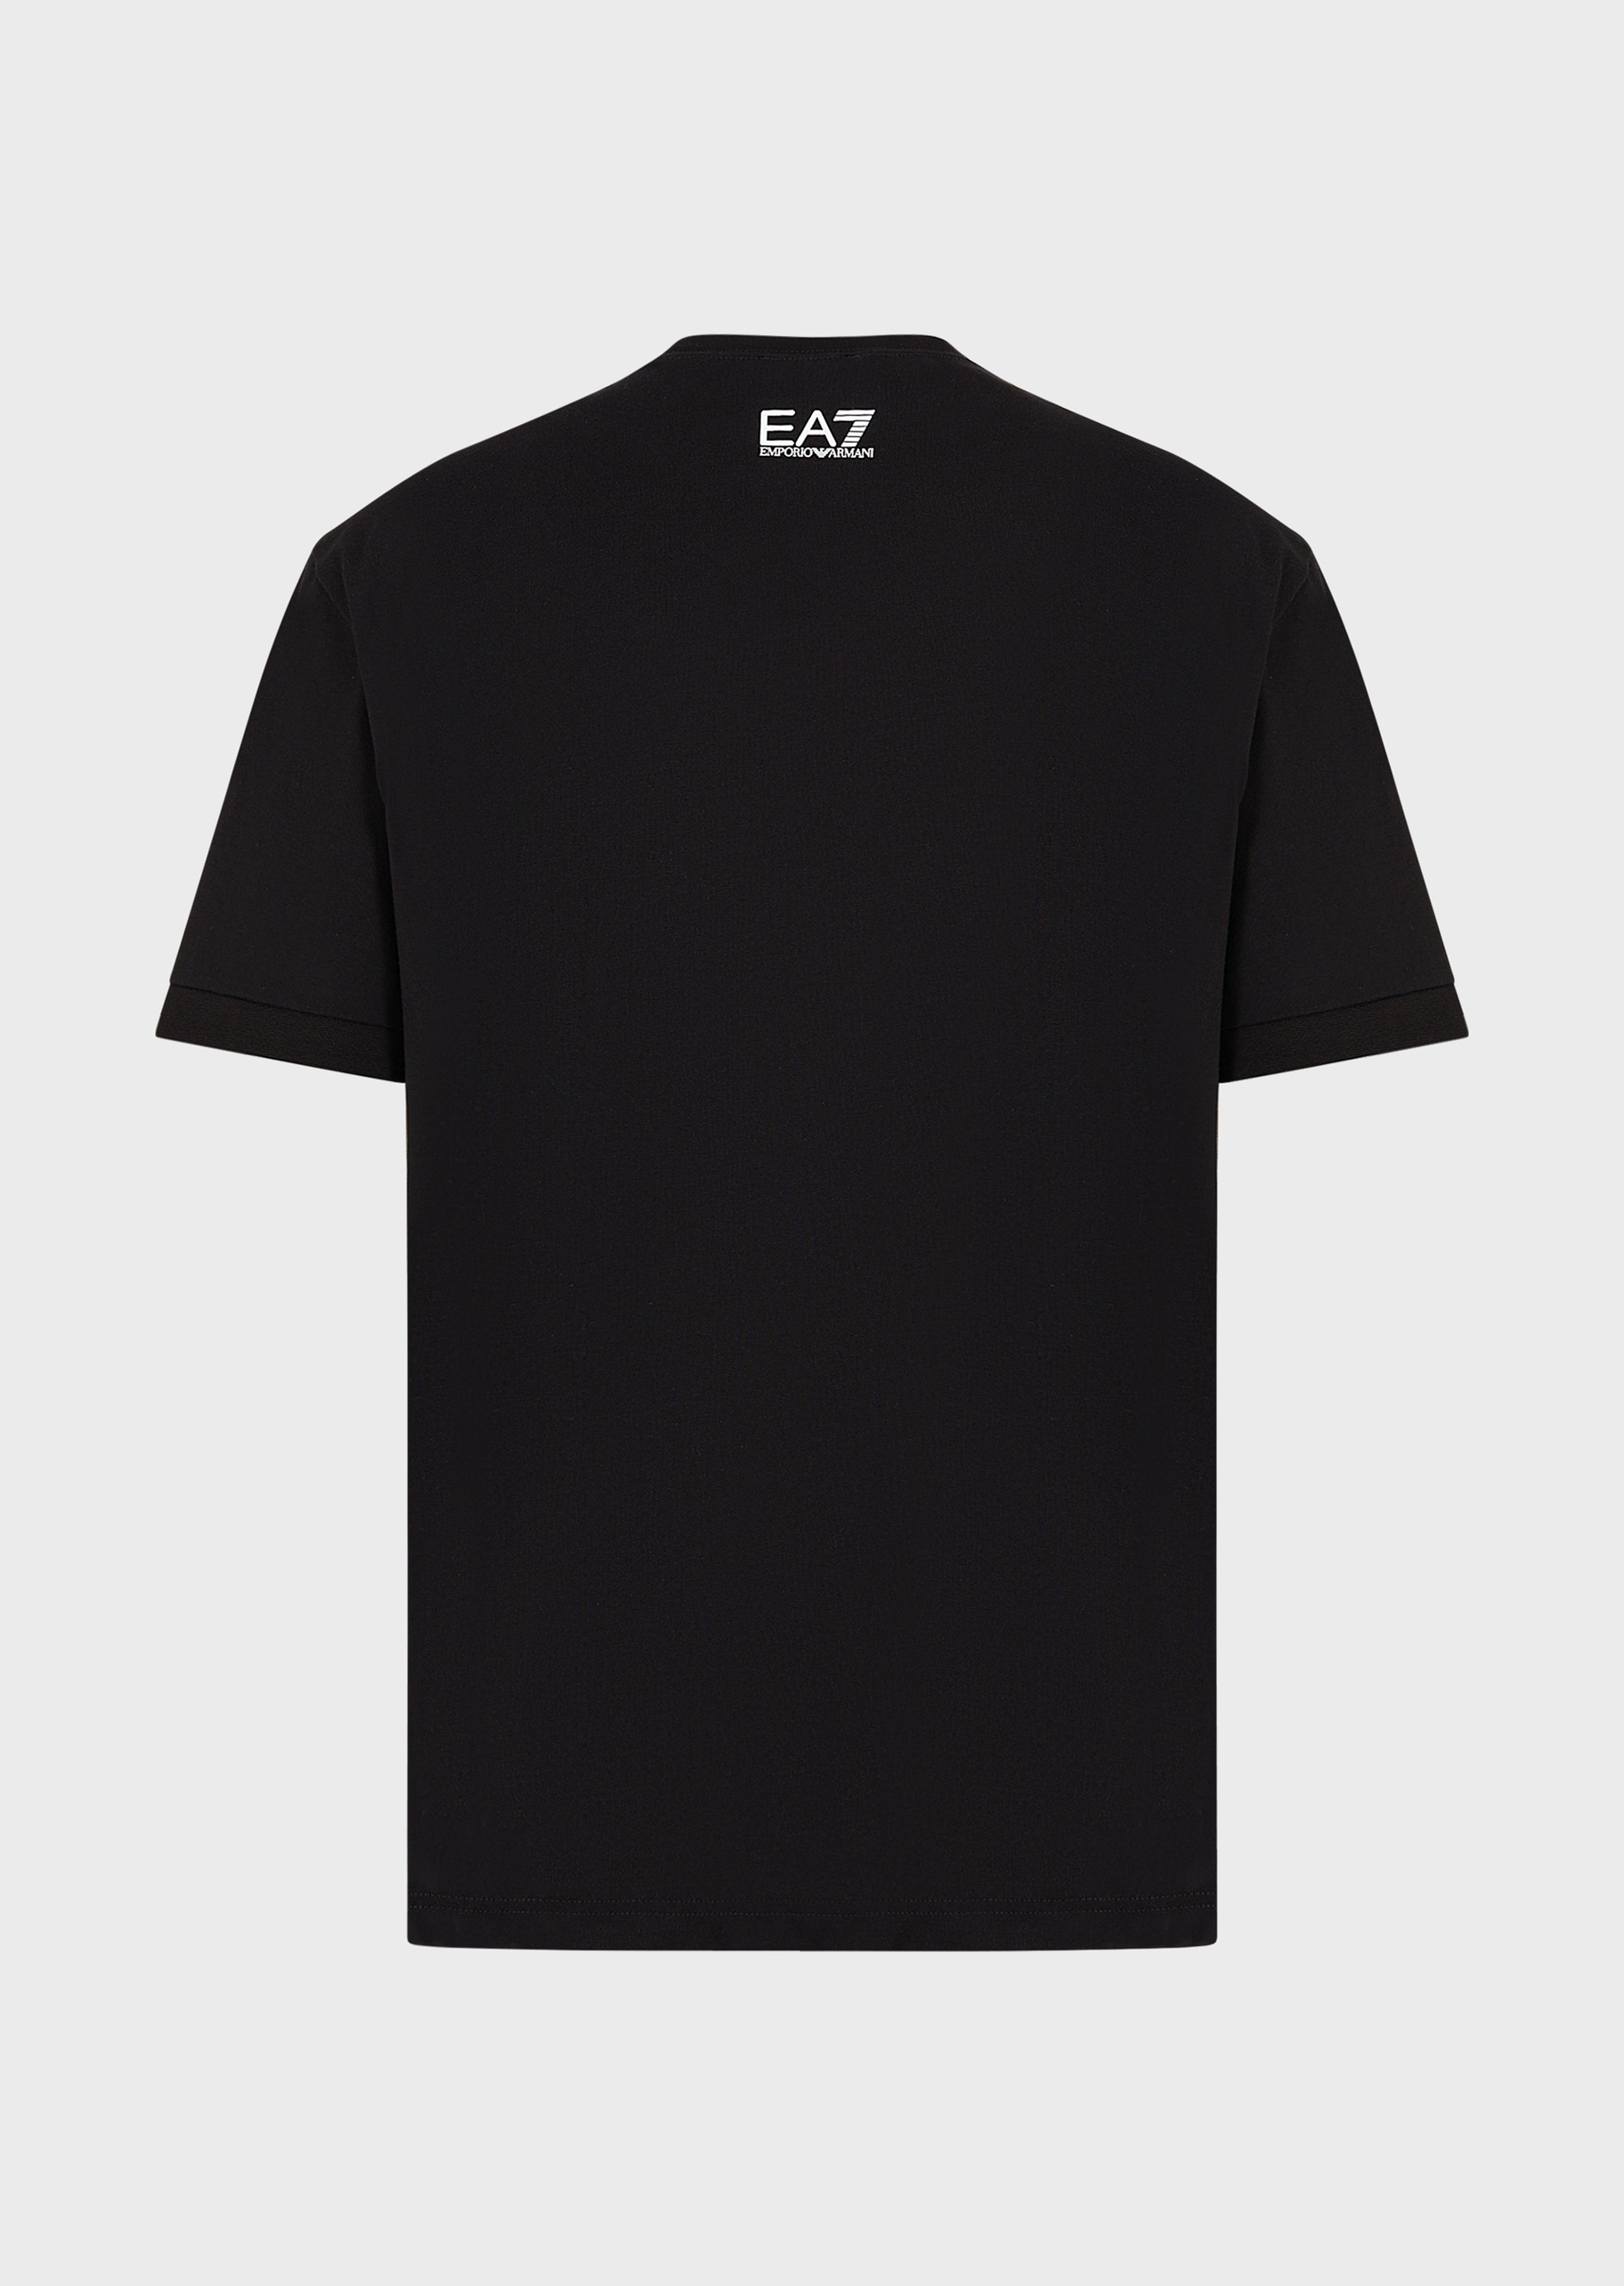 EA7 男士绳绒LOGO全棉运动T恤